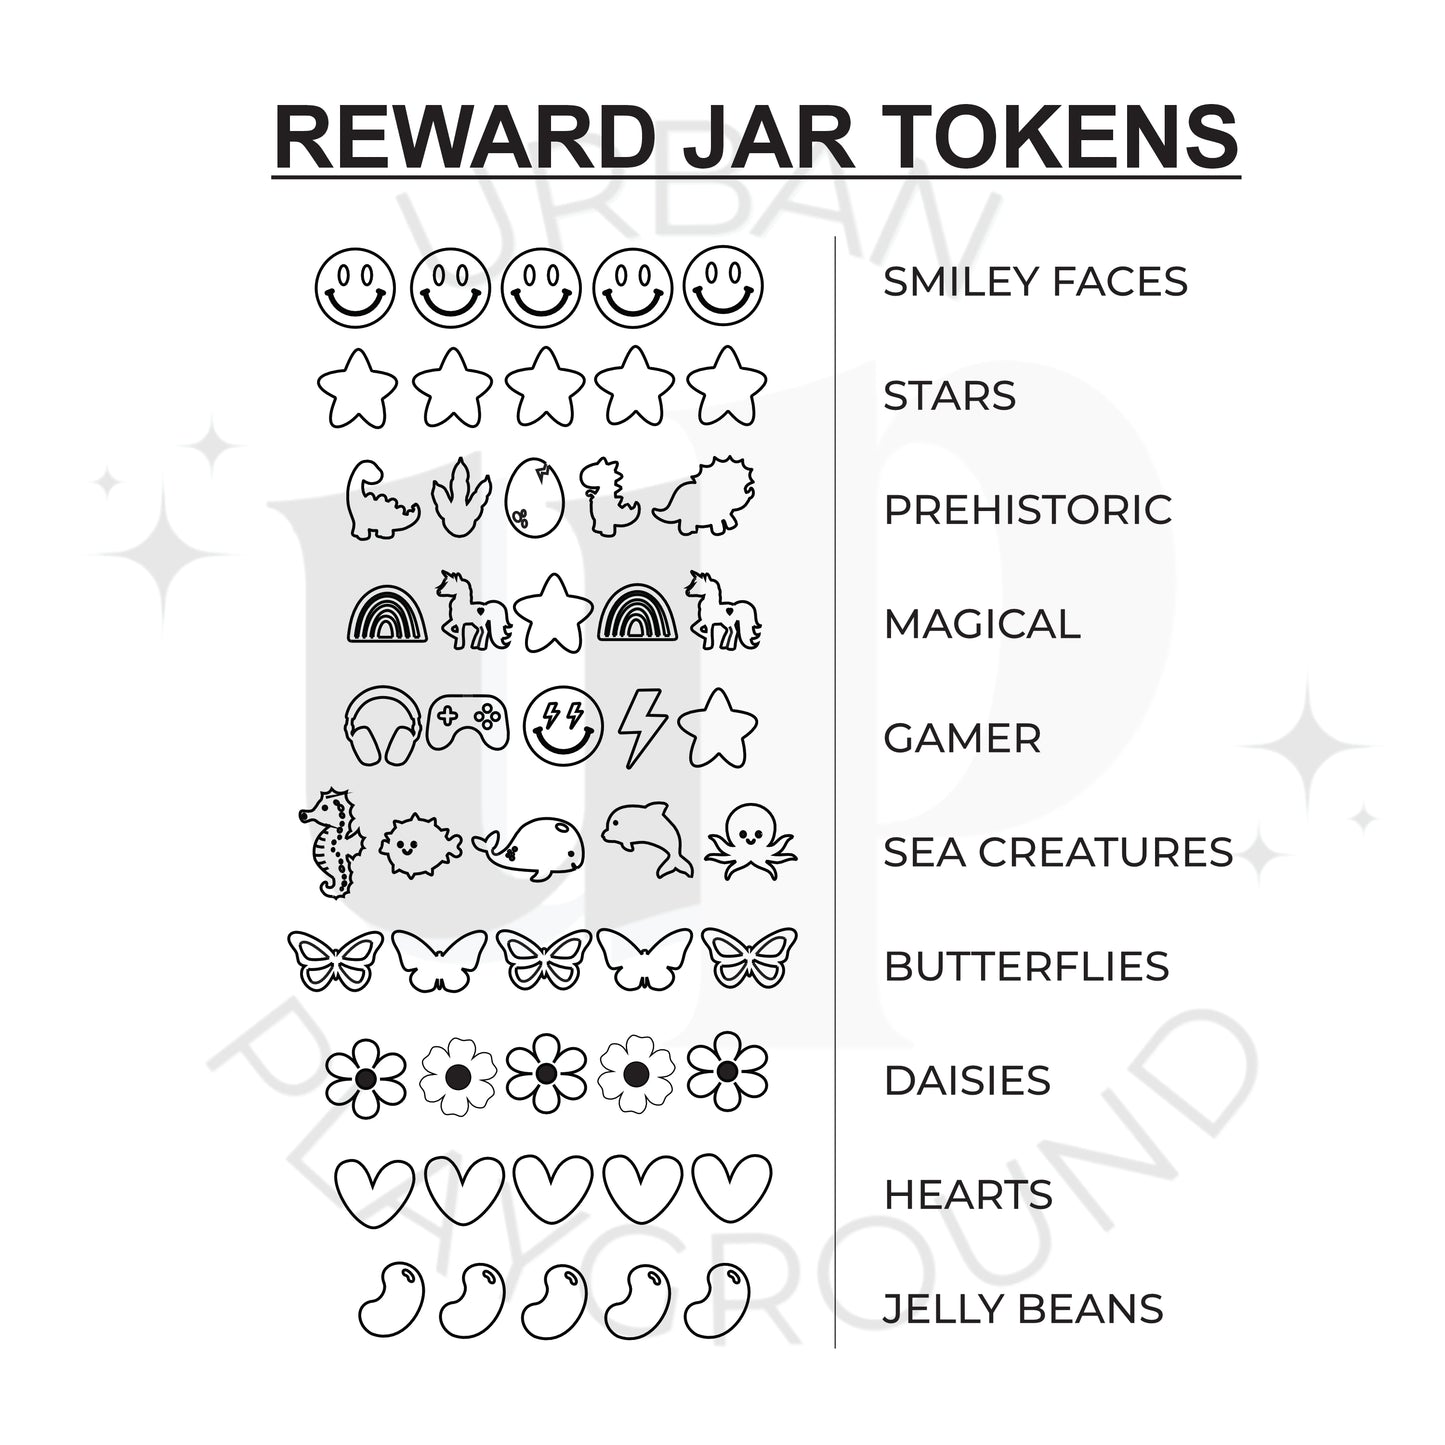 EXTRA Reward Tokens (Jar not included)